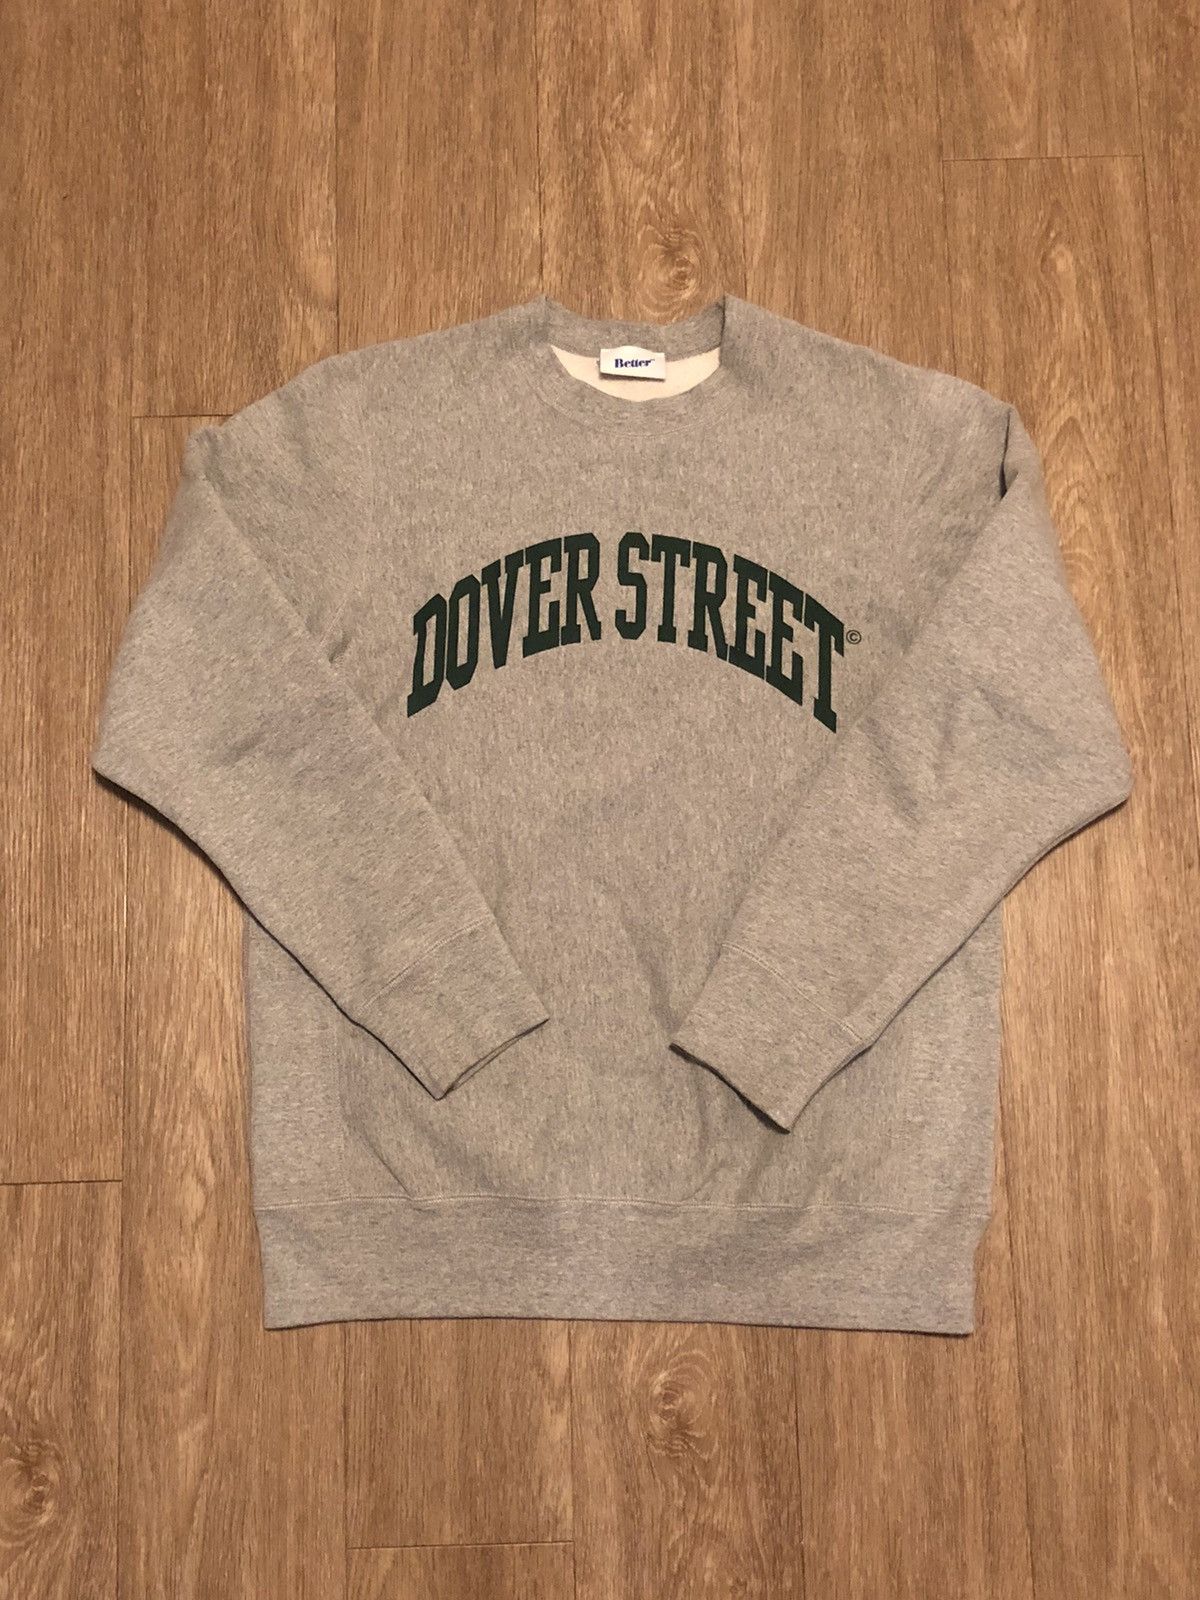 Dover Street Market Better Gift Shop x Dover Street Market Sweatshirt |  Grailed